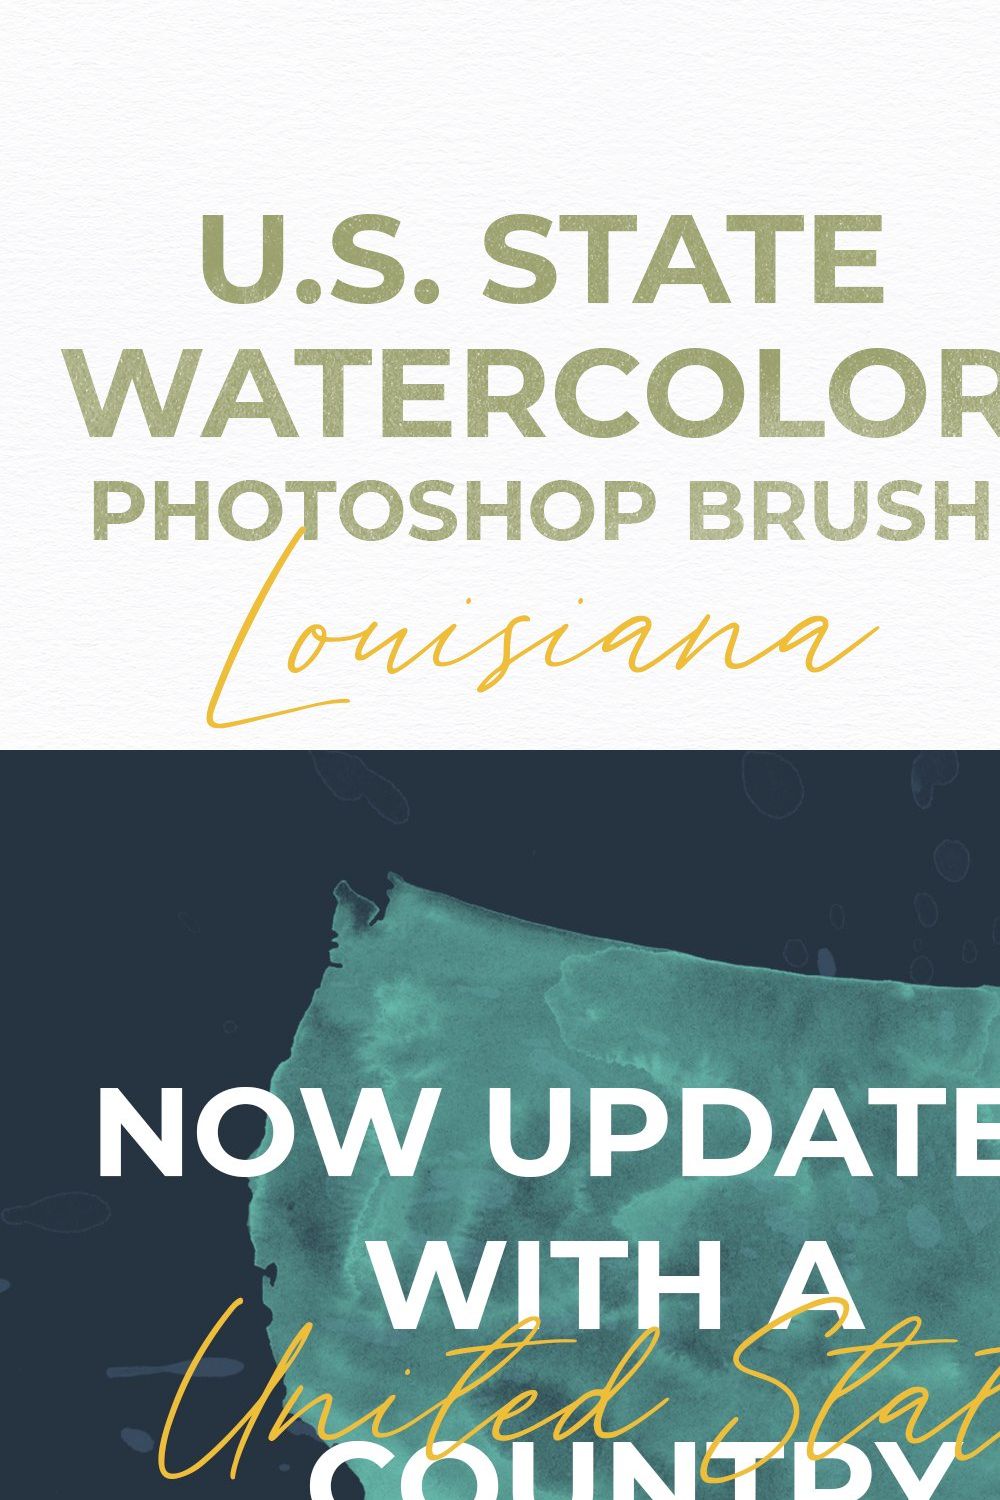 Louisiana US Watercolor PS Brush pinterest preview image.